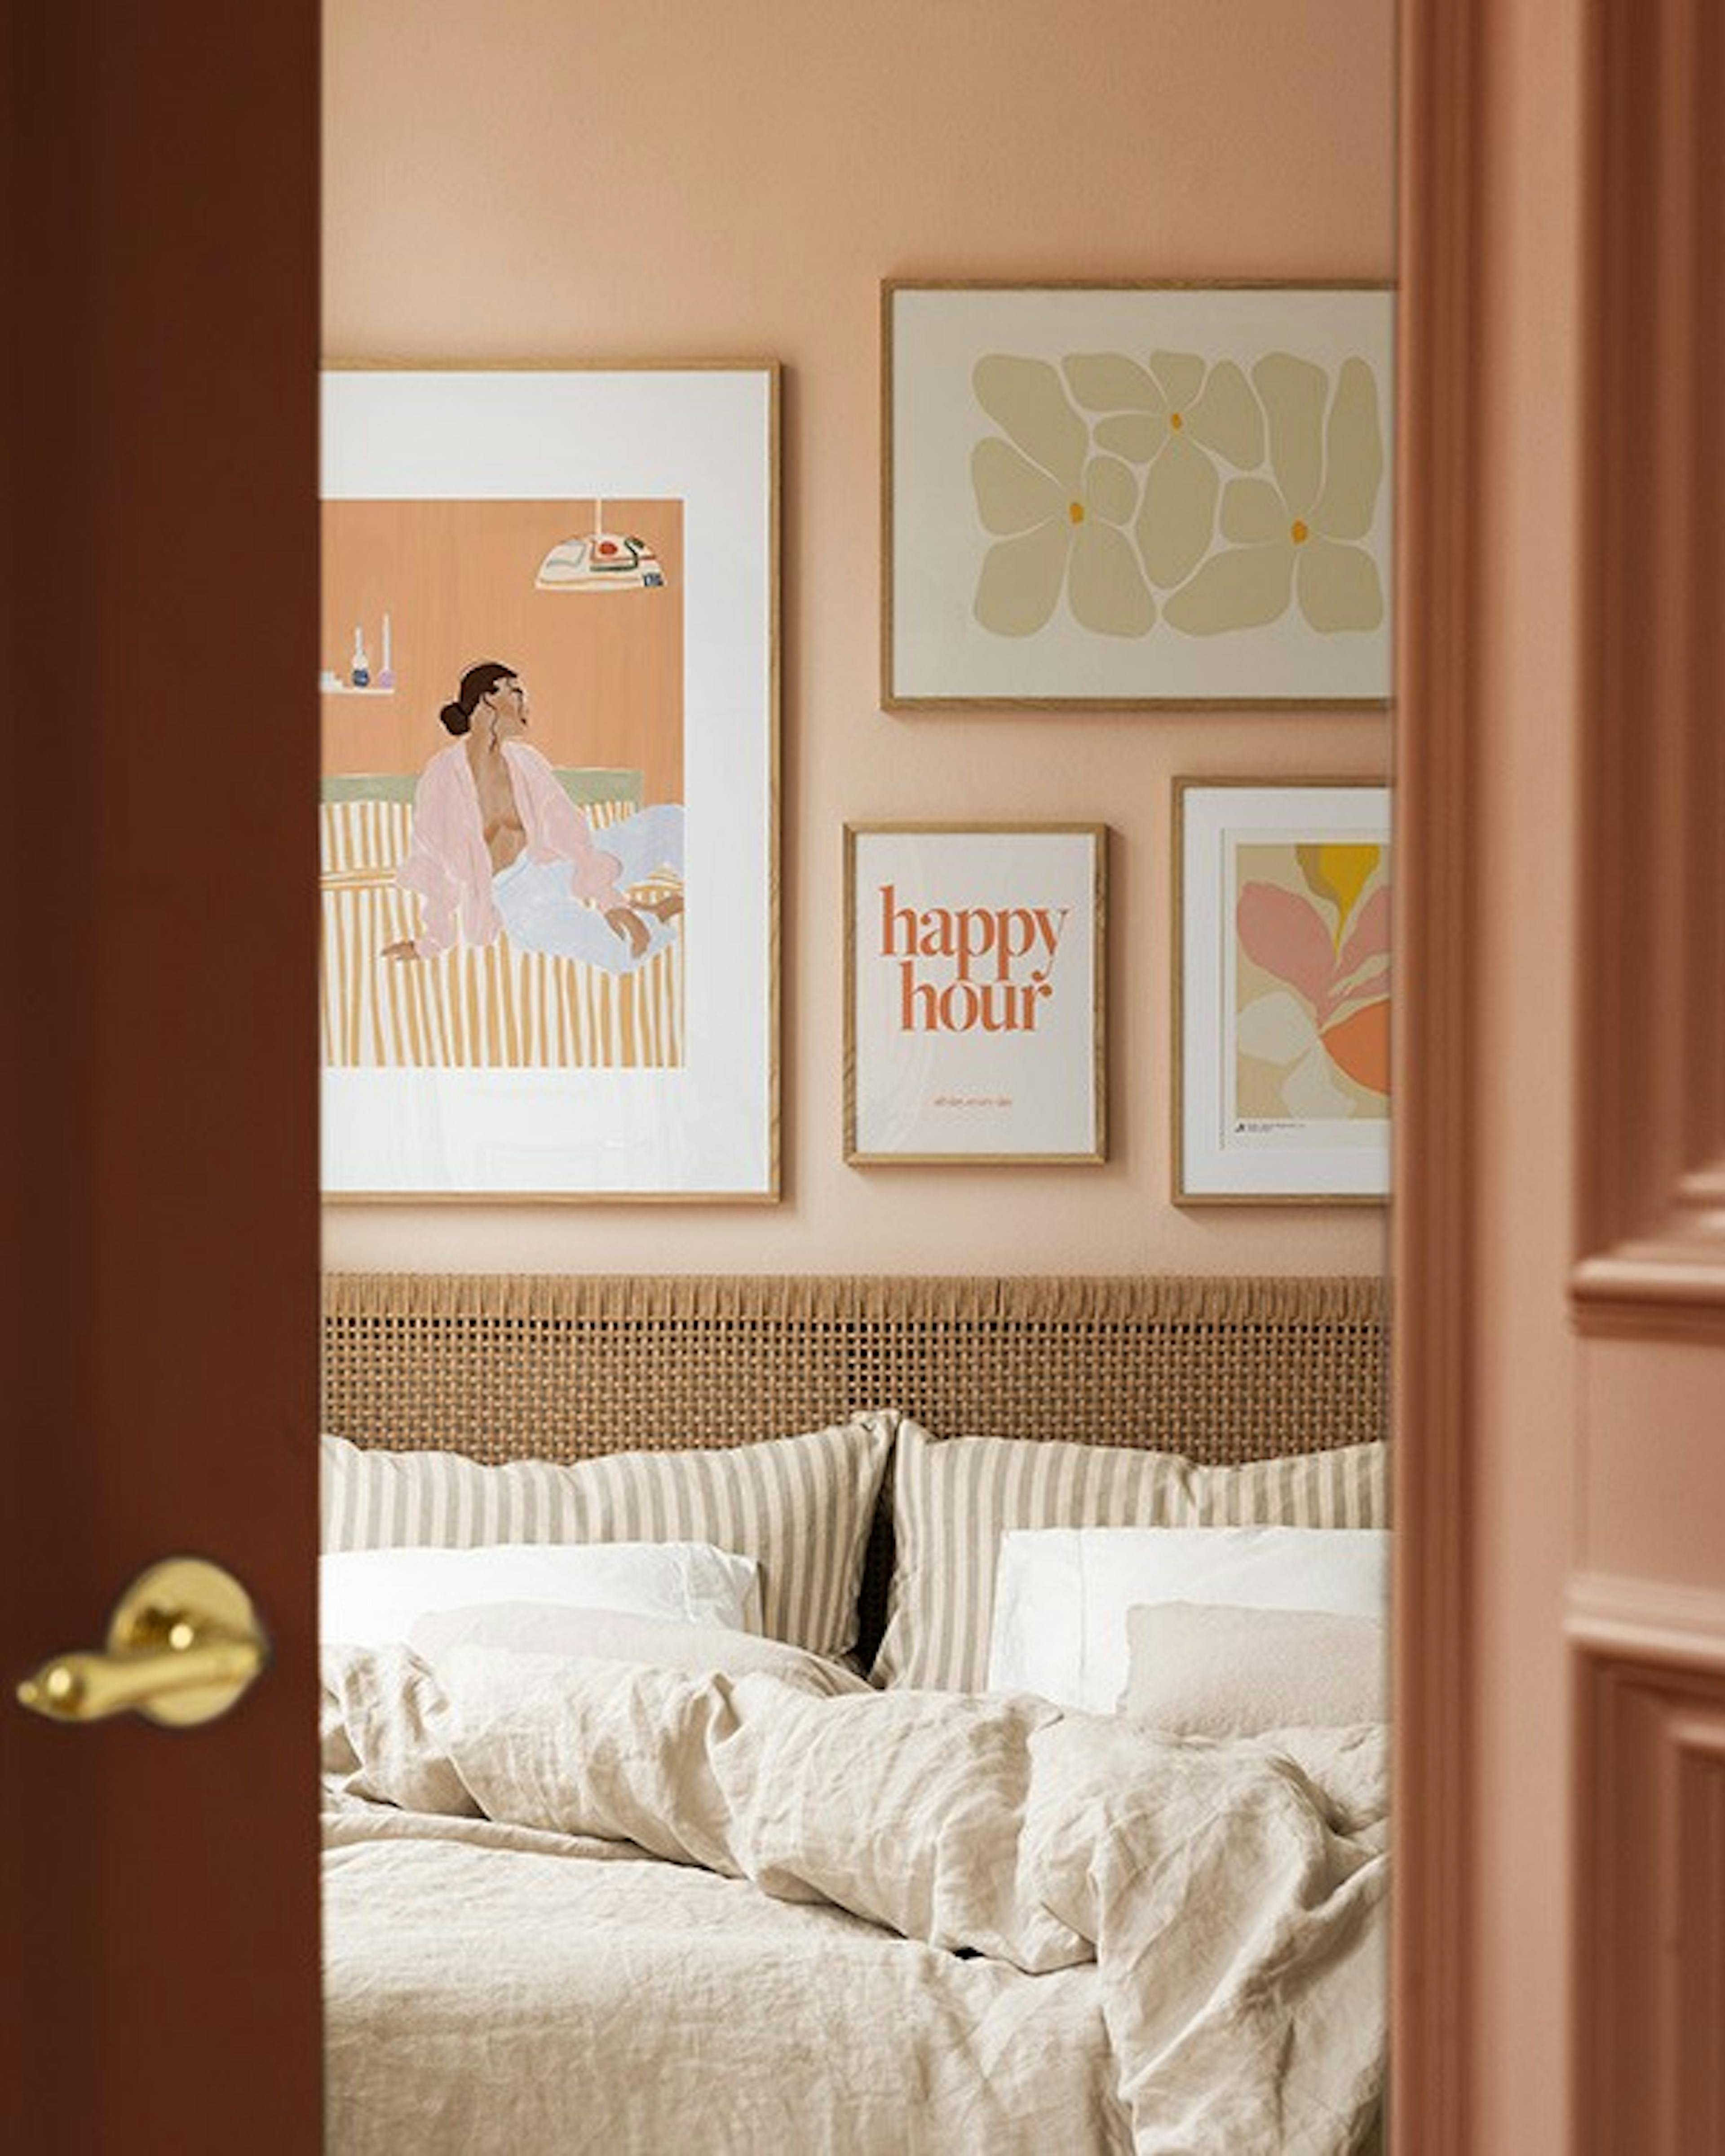 Peachy bedroom fotowand